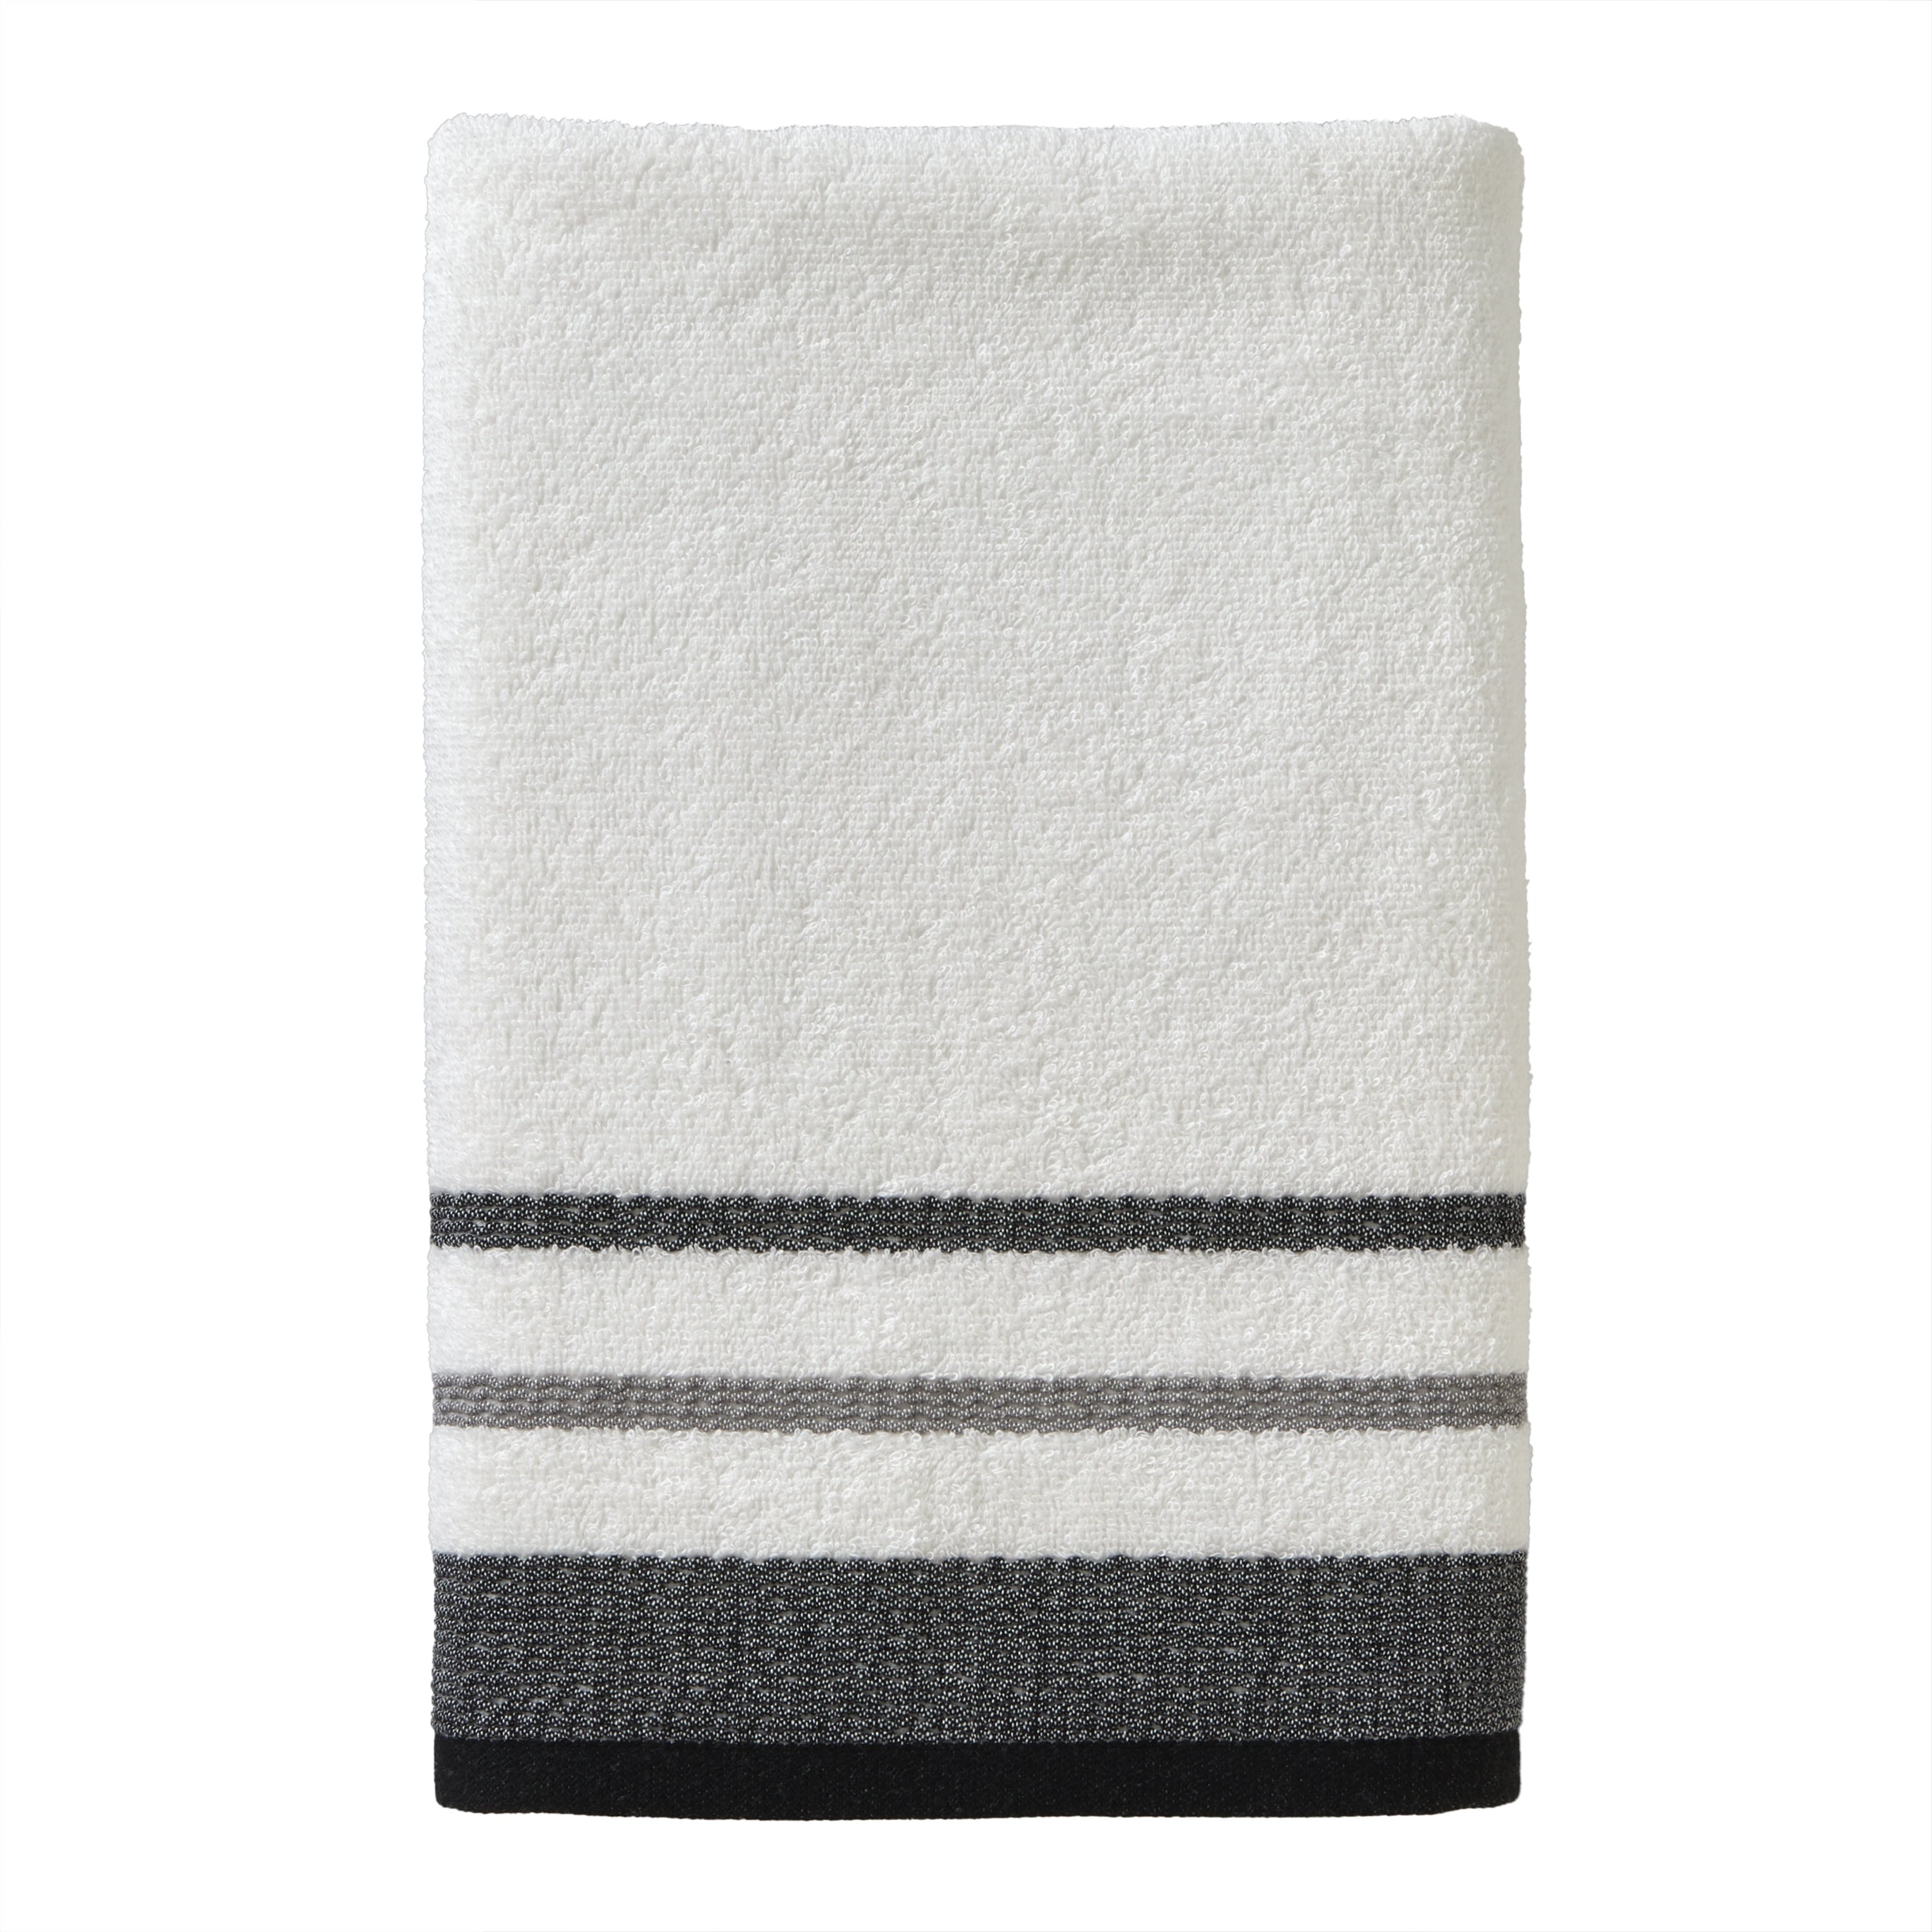 Black And White Checkered Bath Towel & Hand Towel Set